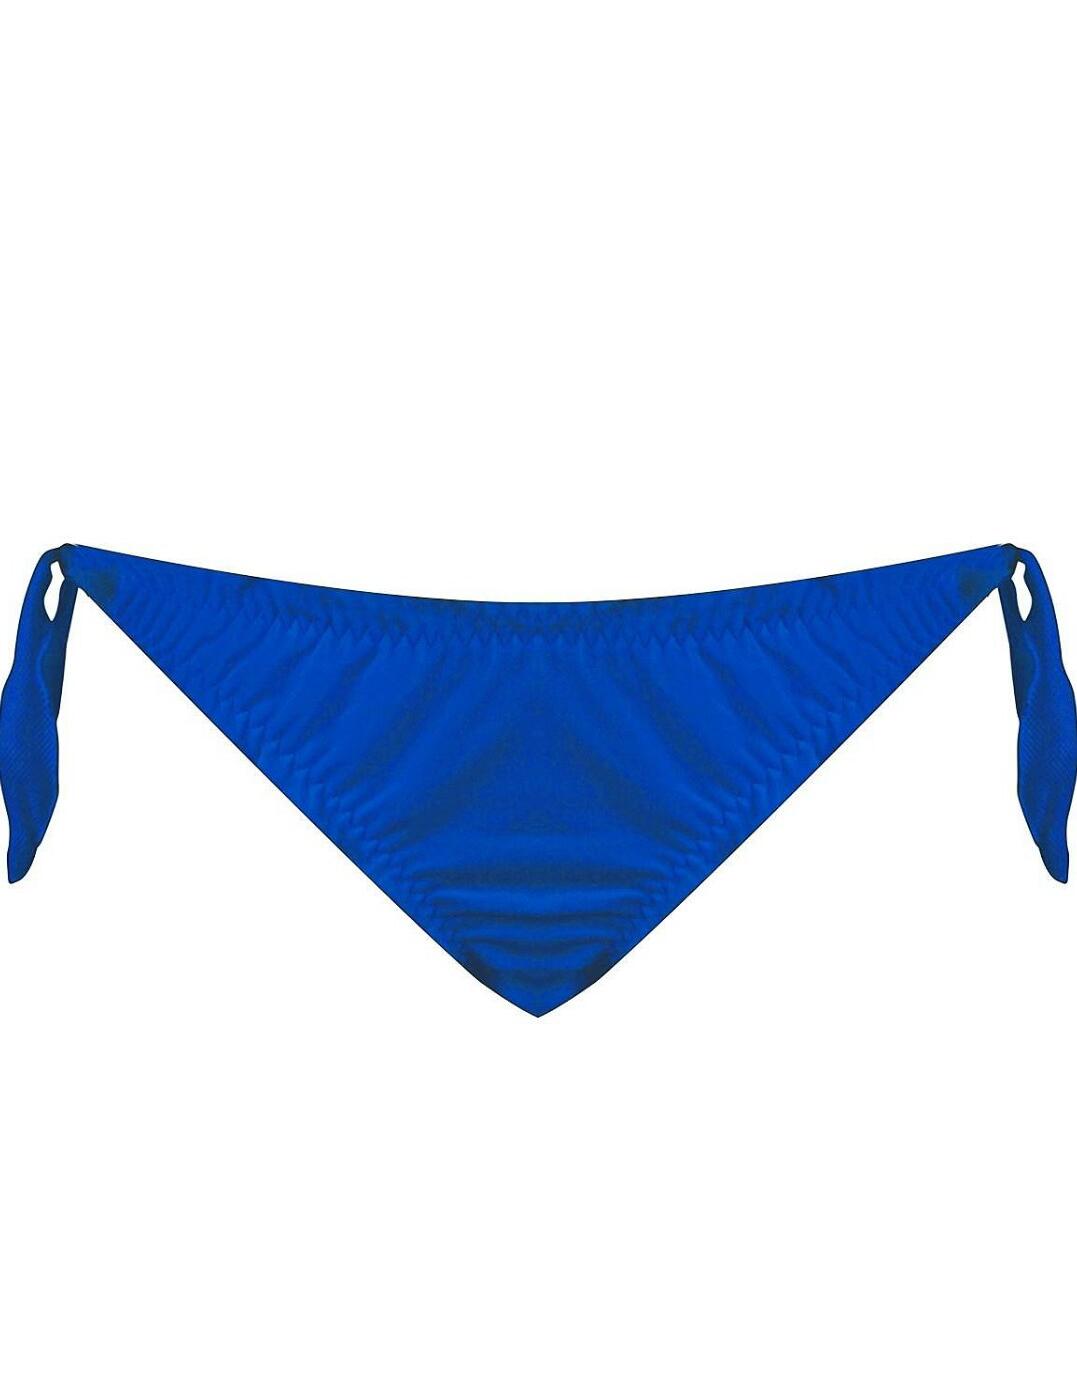 62006 Pour Moi Mesh It Up Tie Side Bikini Brief  - 62006 Ultramarine